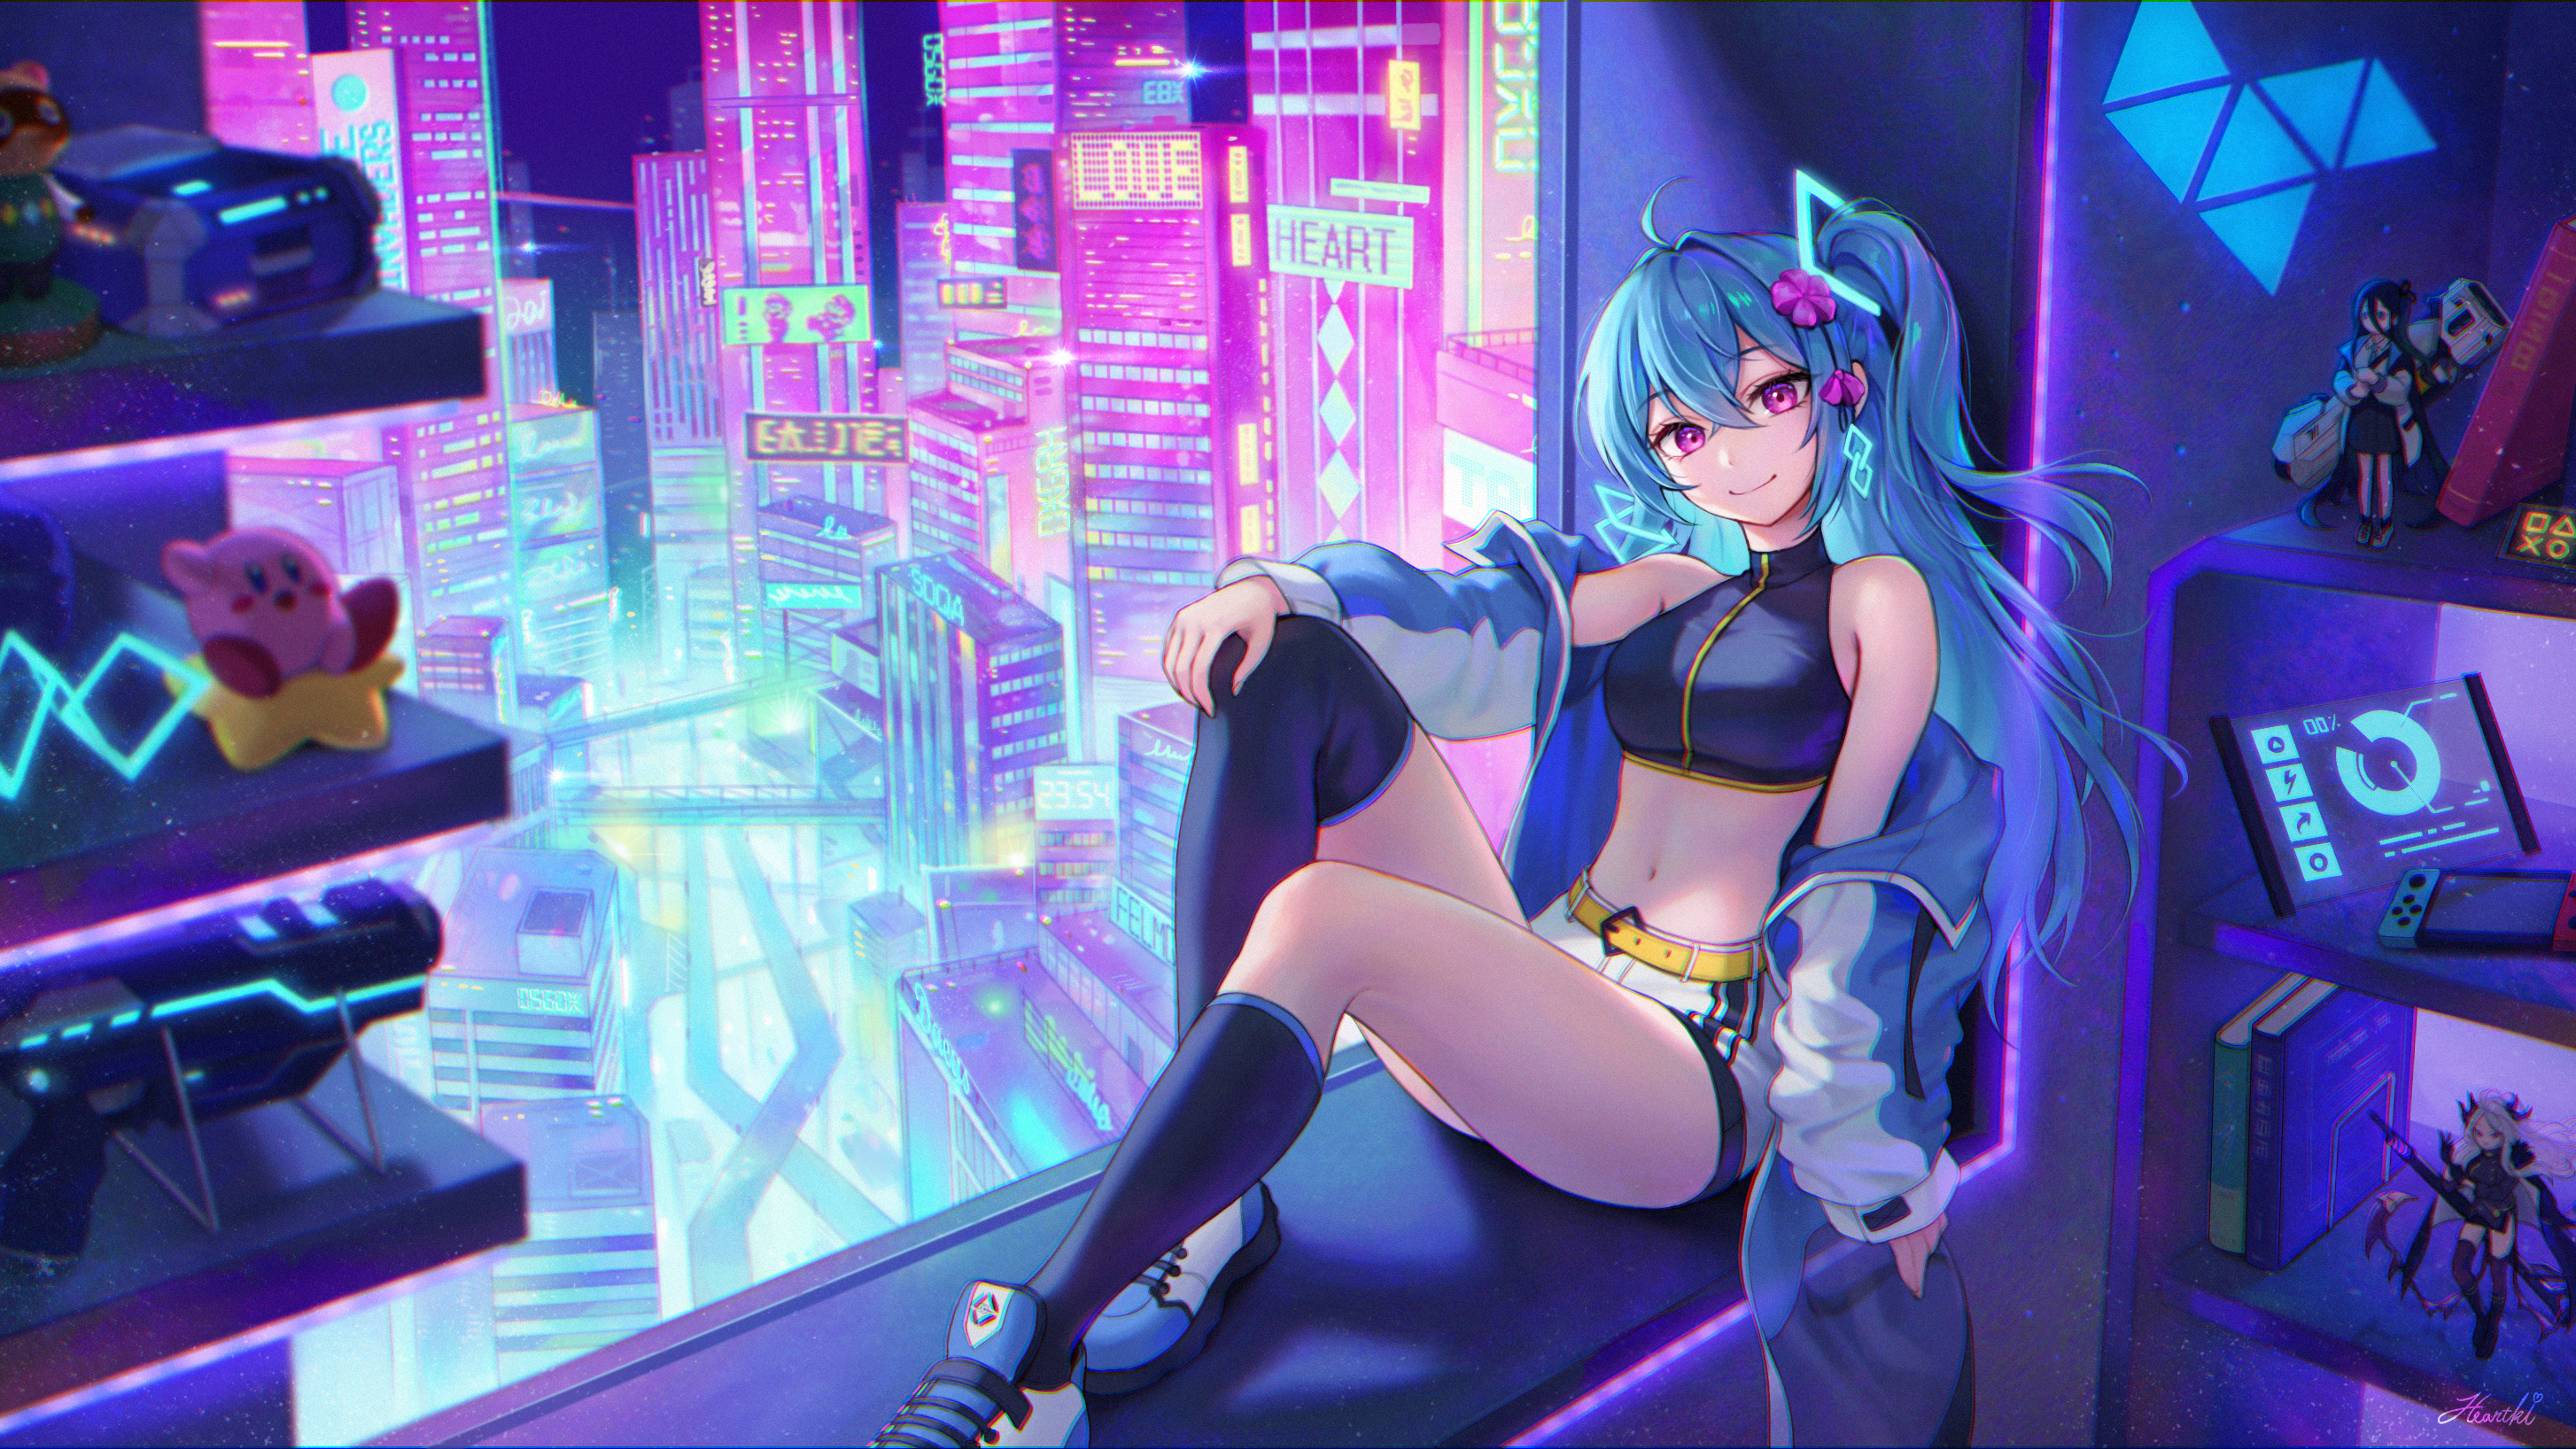 Anime 2908x1636 anime anime girls blue hair shorts city cyberpunk purple eyes cityscape